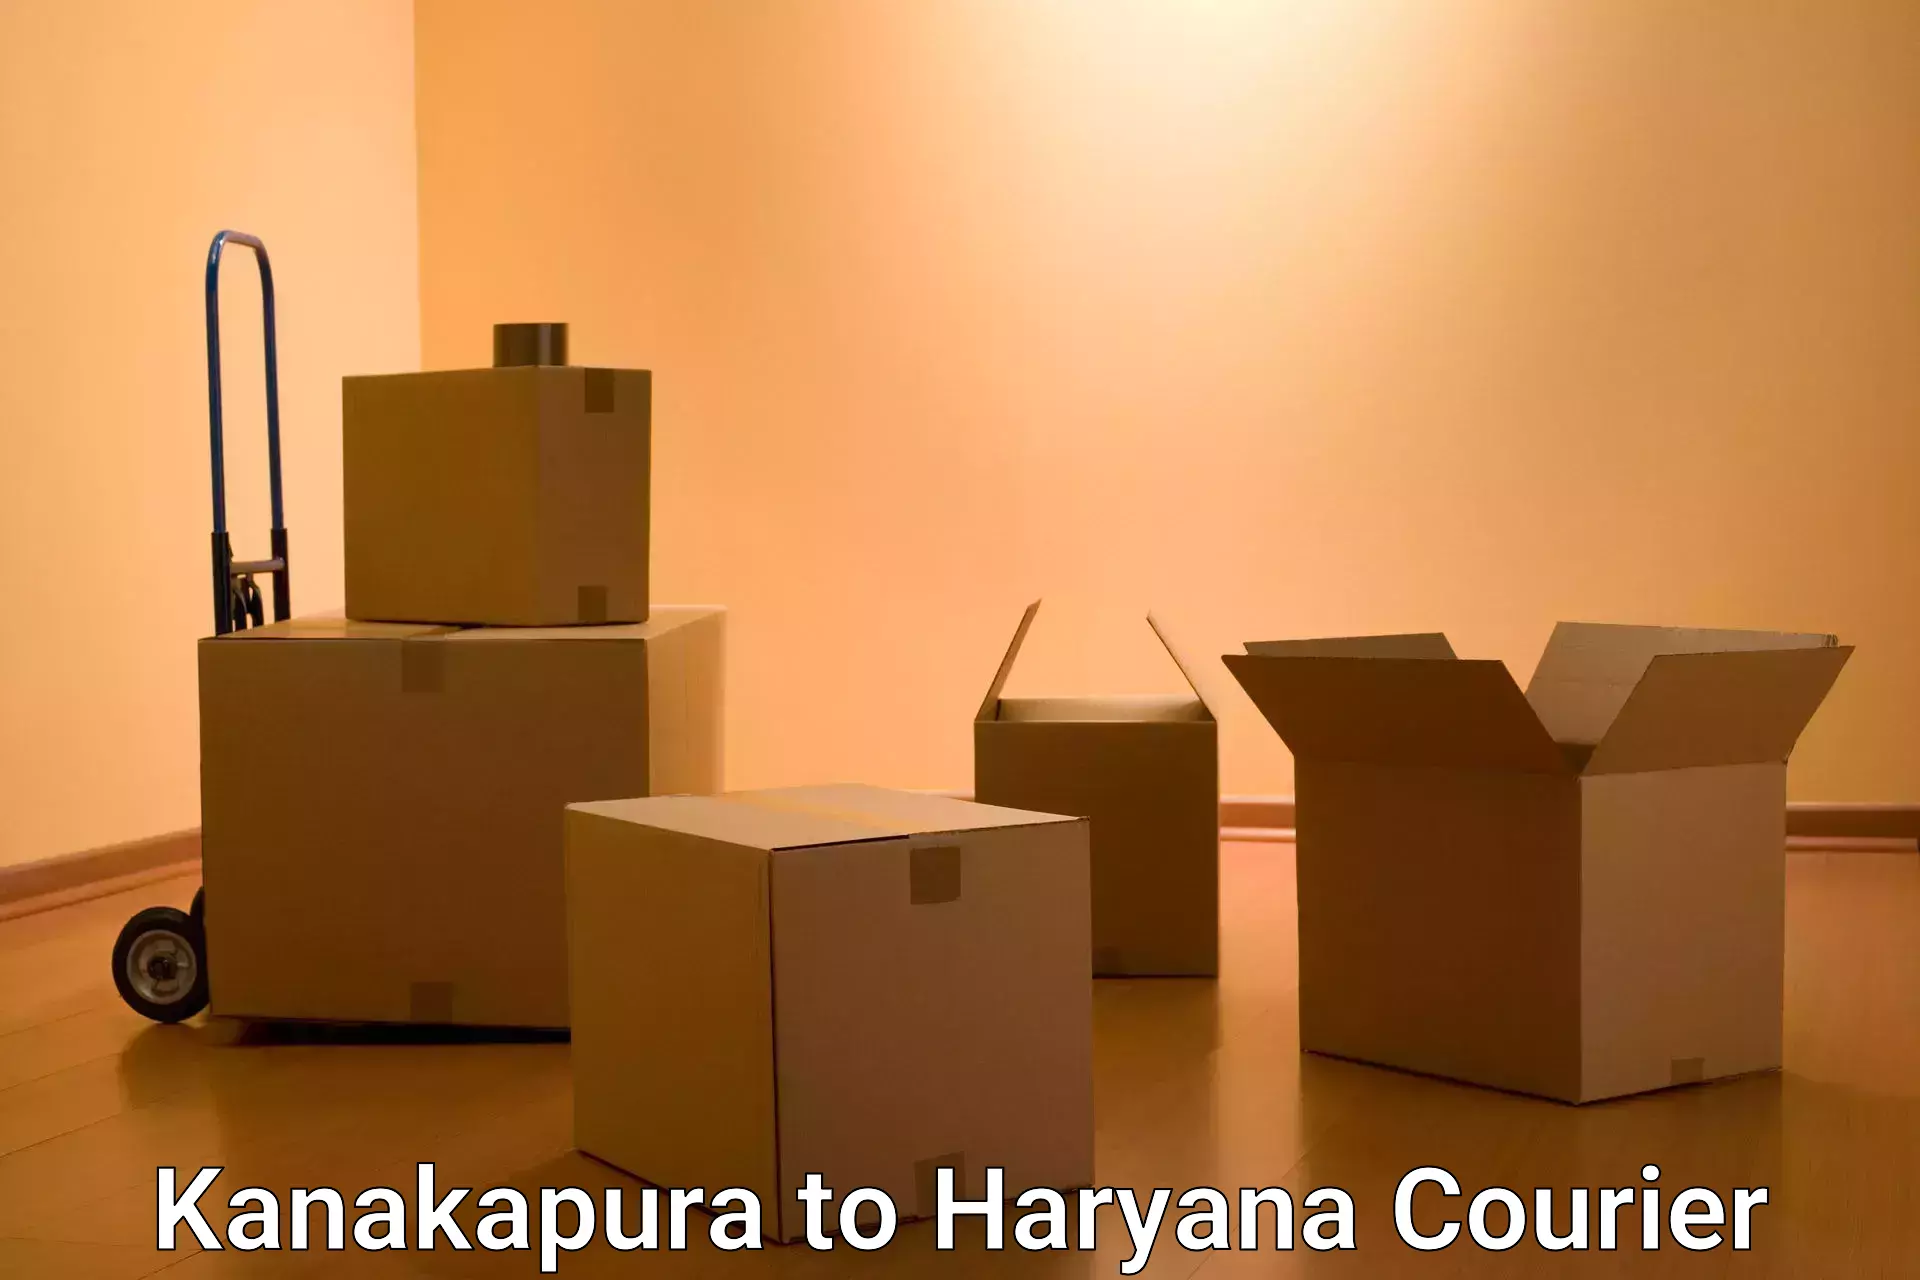 On-demand delivery Kanakapura to NCR Haryana